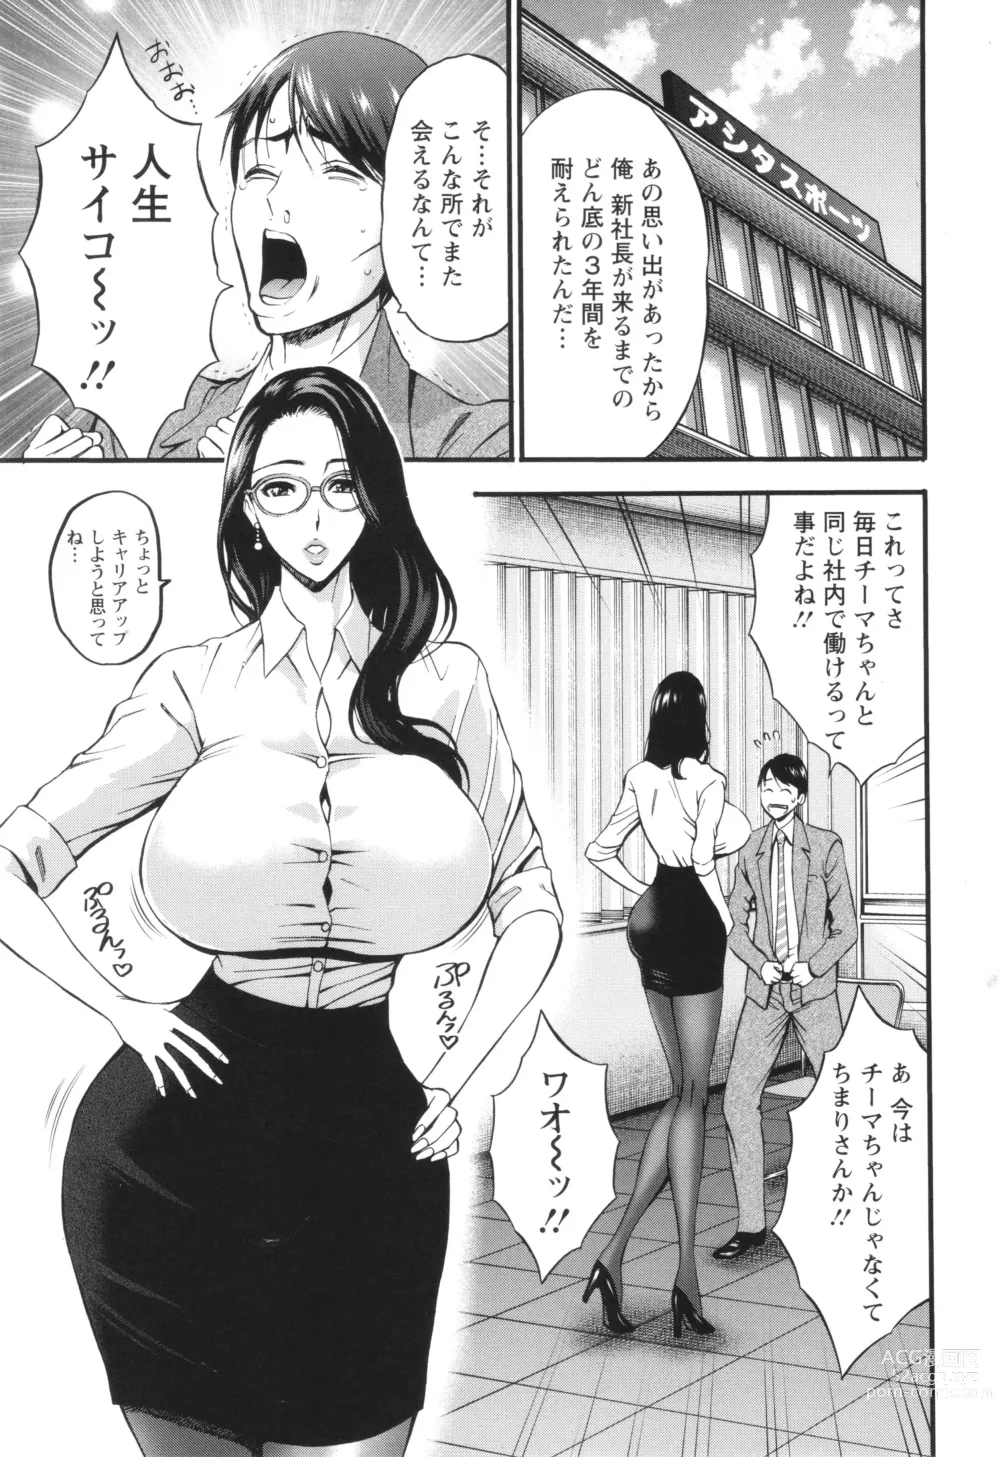 Page 31 of manga Compla Yuruyuru Chimari-san  - Chimaris compliance awareness is very lax.